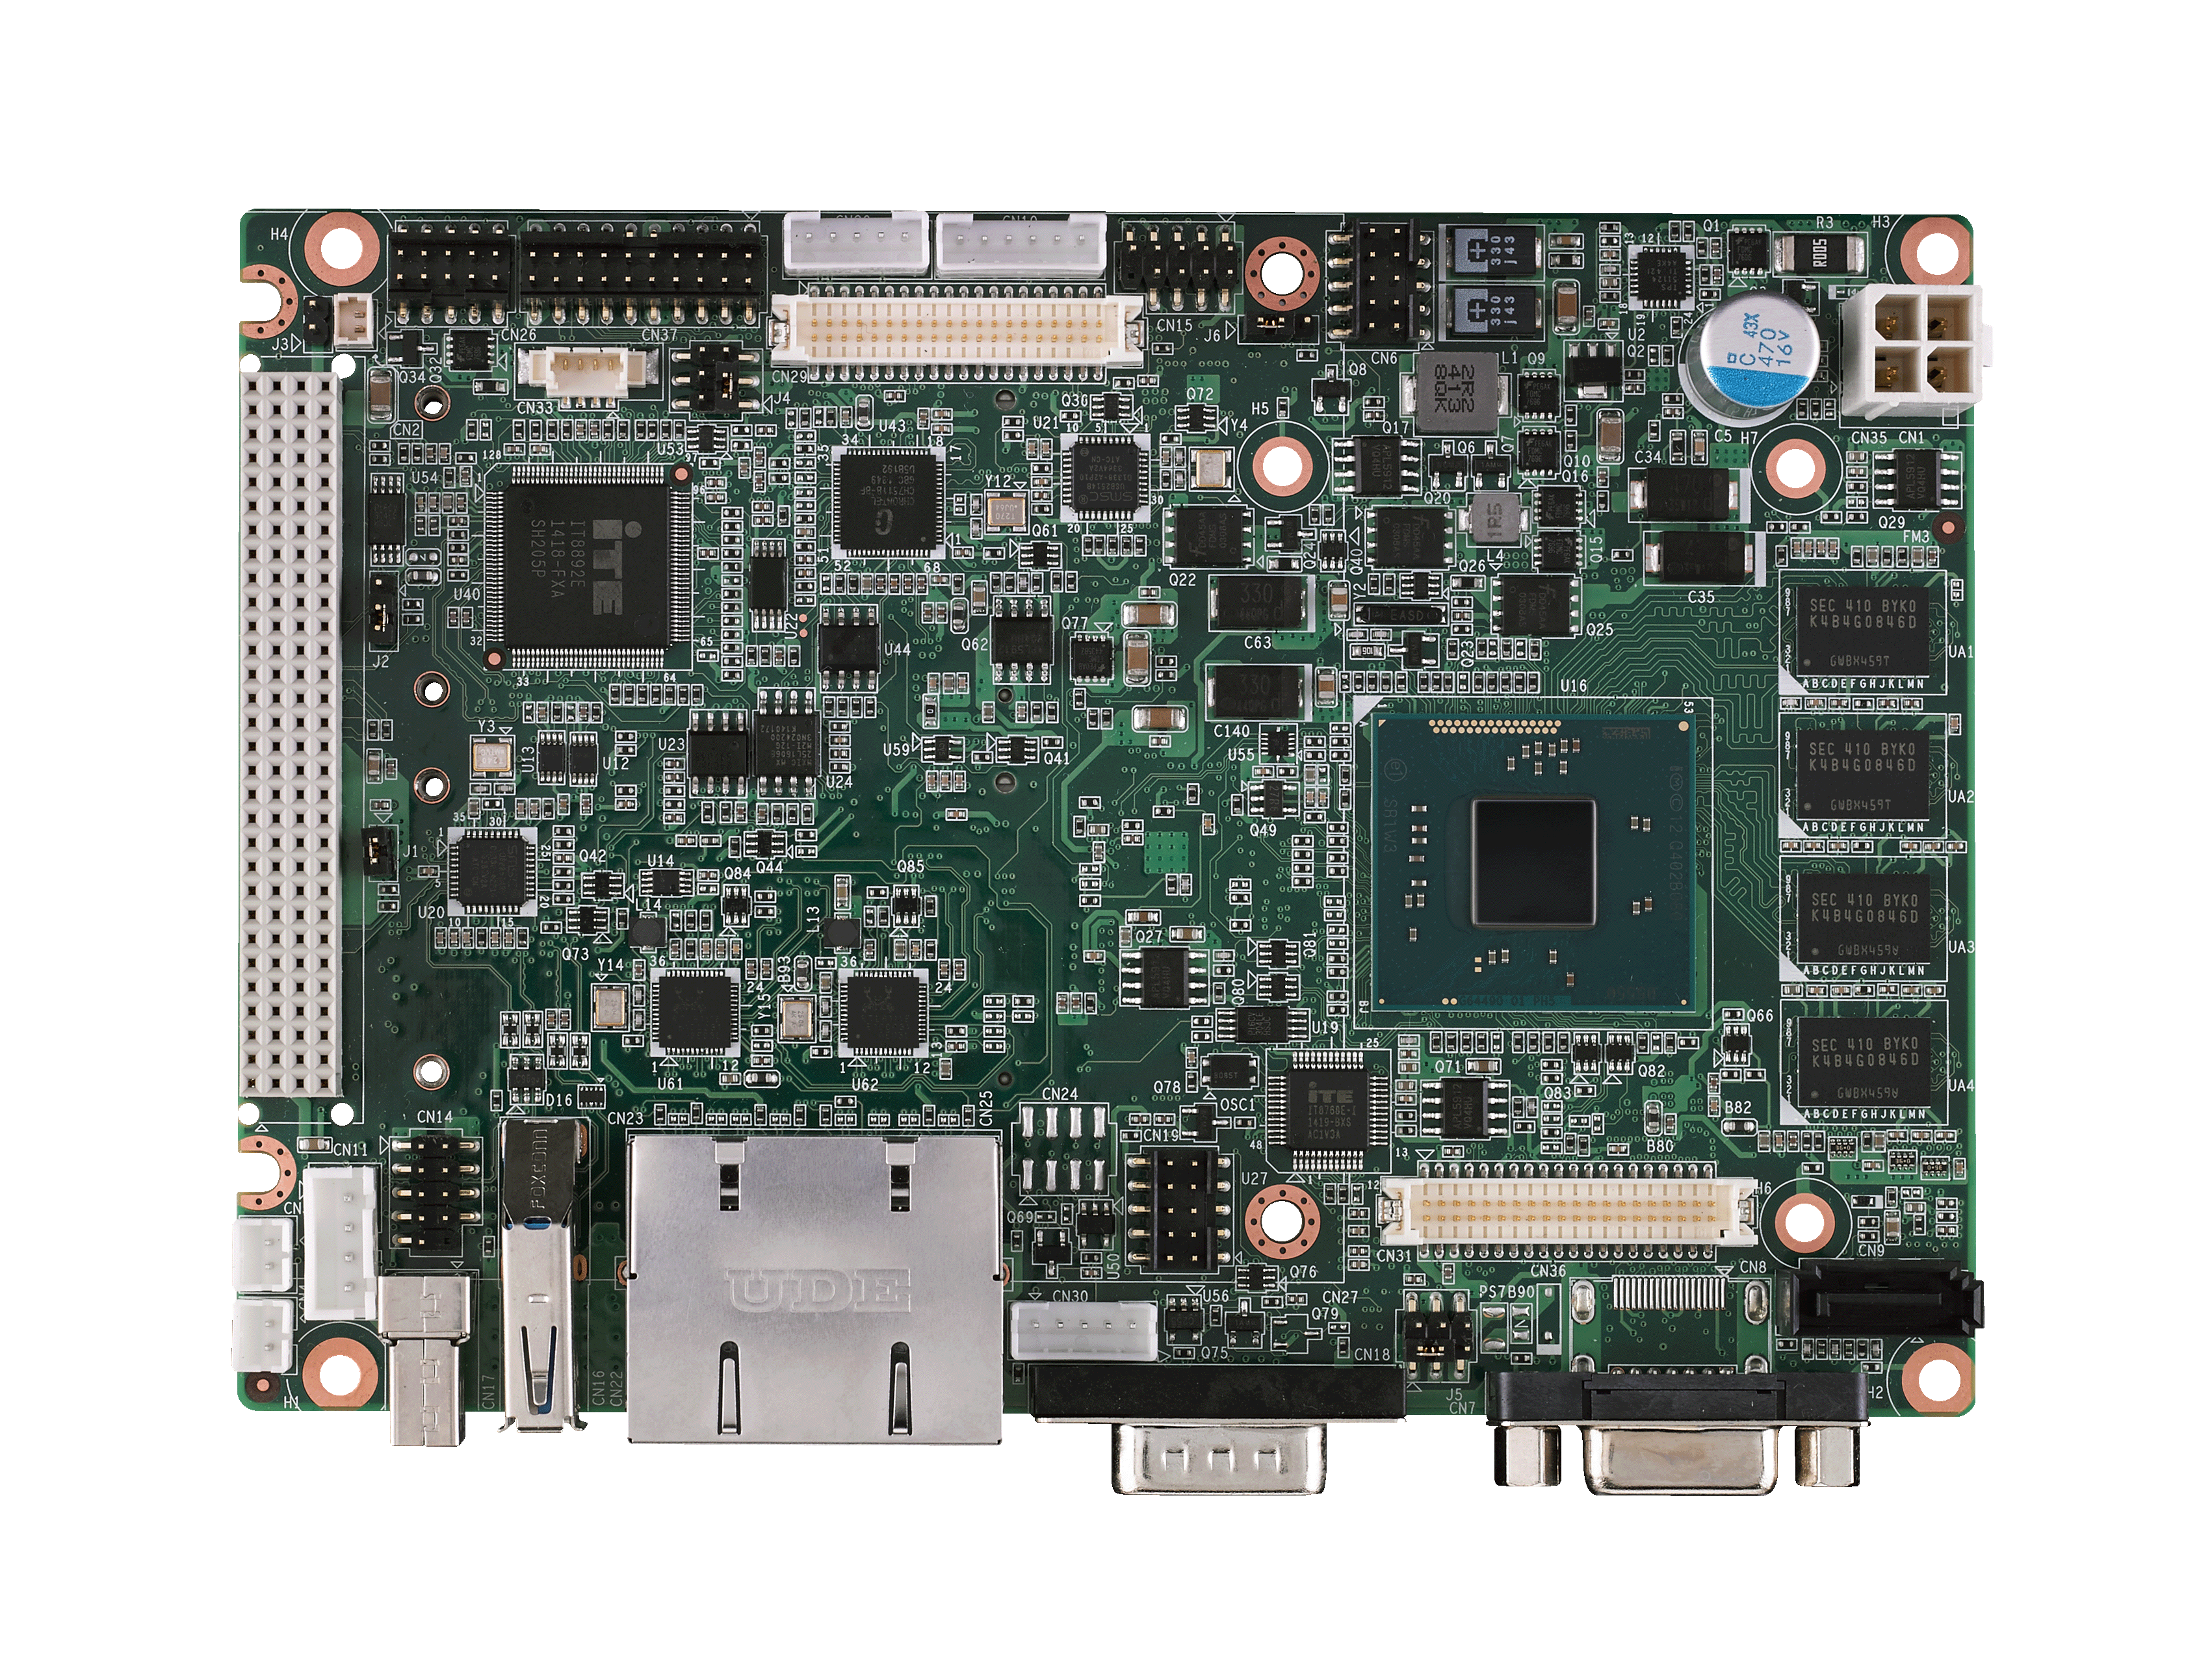 3.5” Embedded Single Board Computer Intel<sup>®</sup> Atom E3825, PCI-104 4G RAM/VGA+LVDS